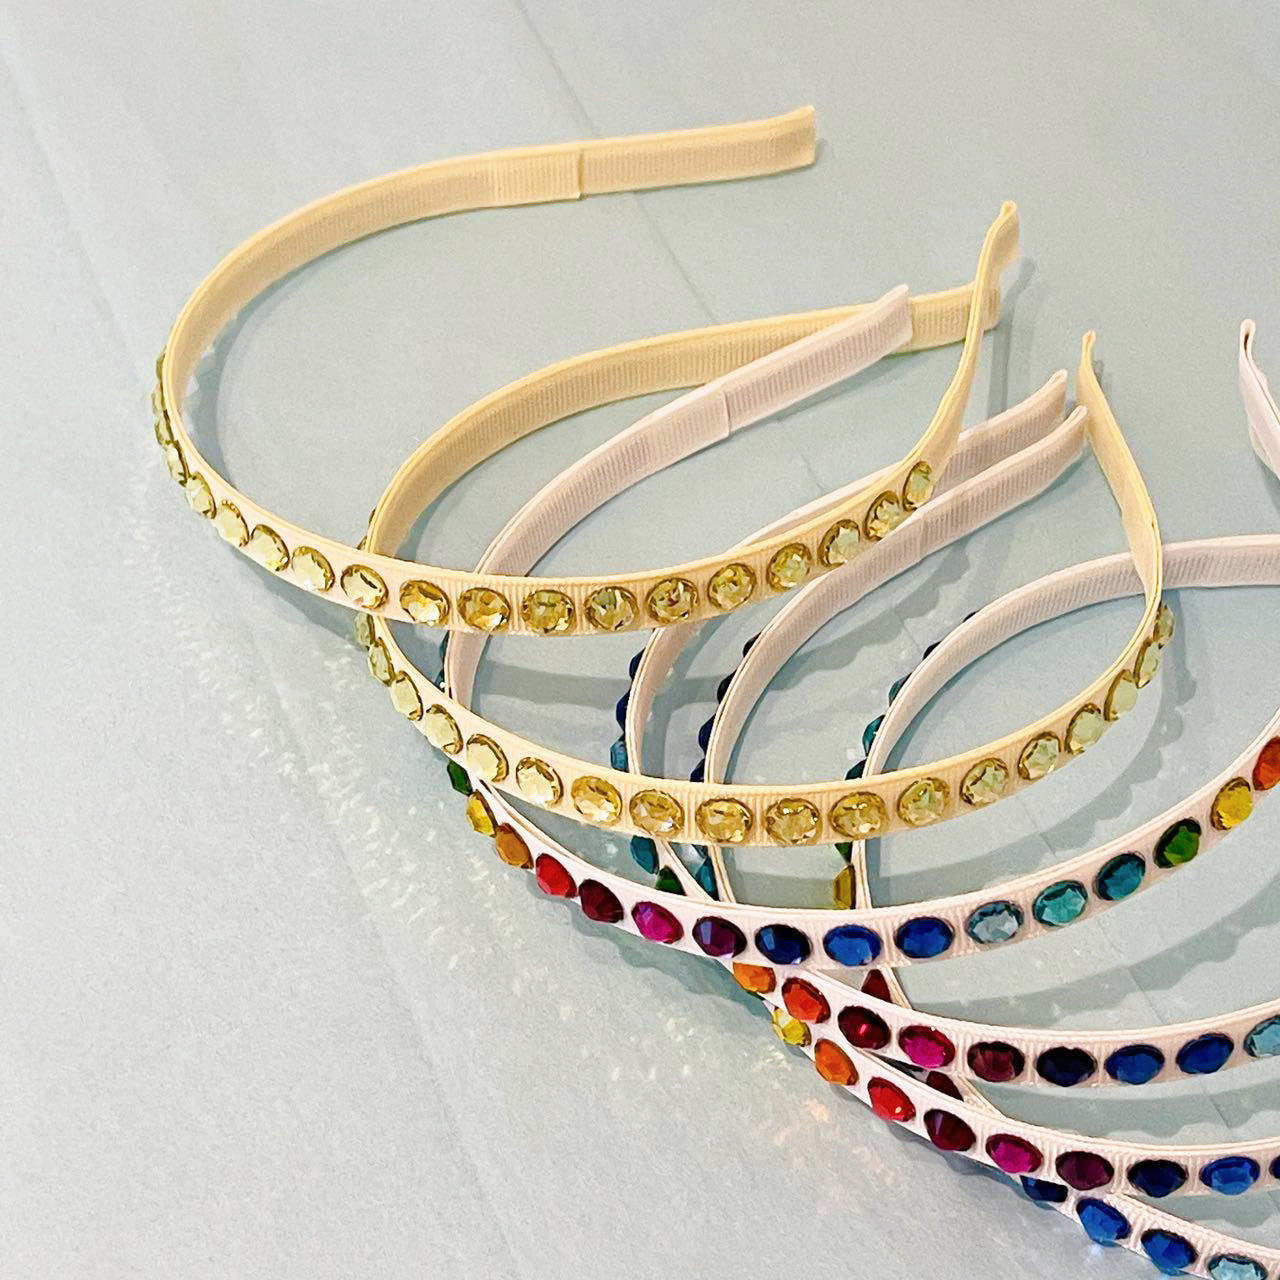 Olilia Designs Deluxe Swarovski Crystal Headband